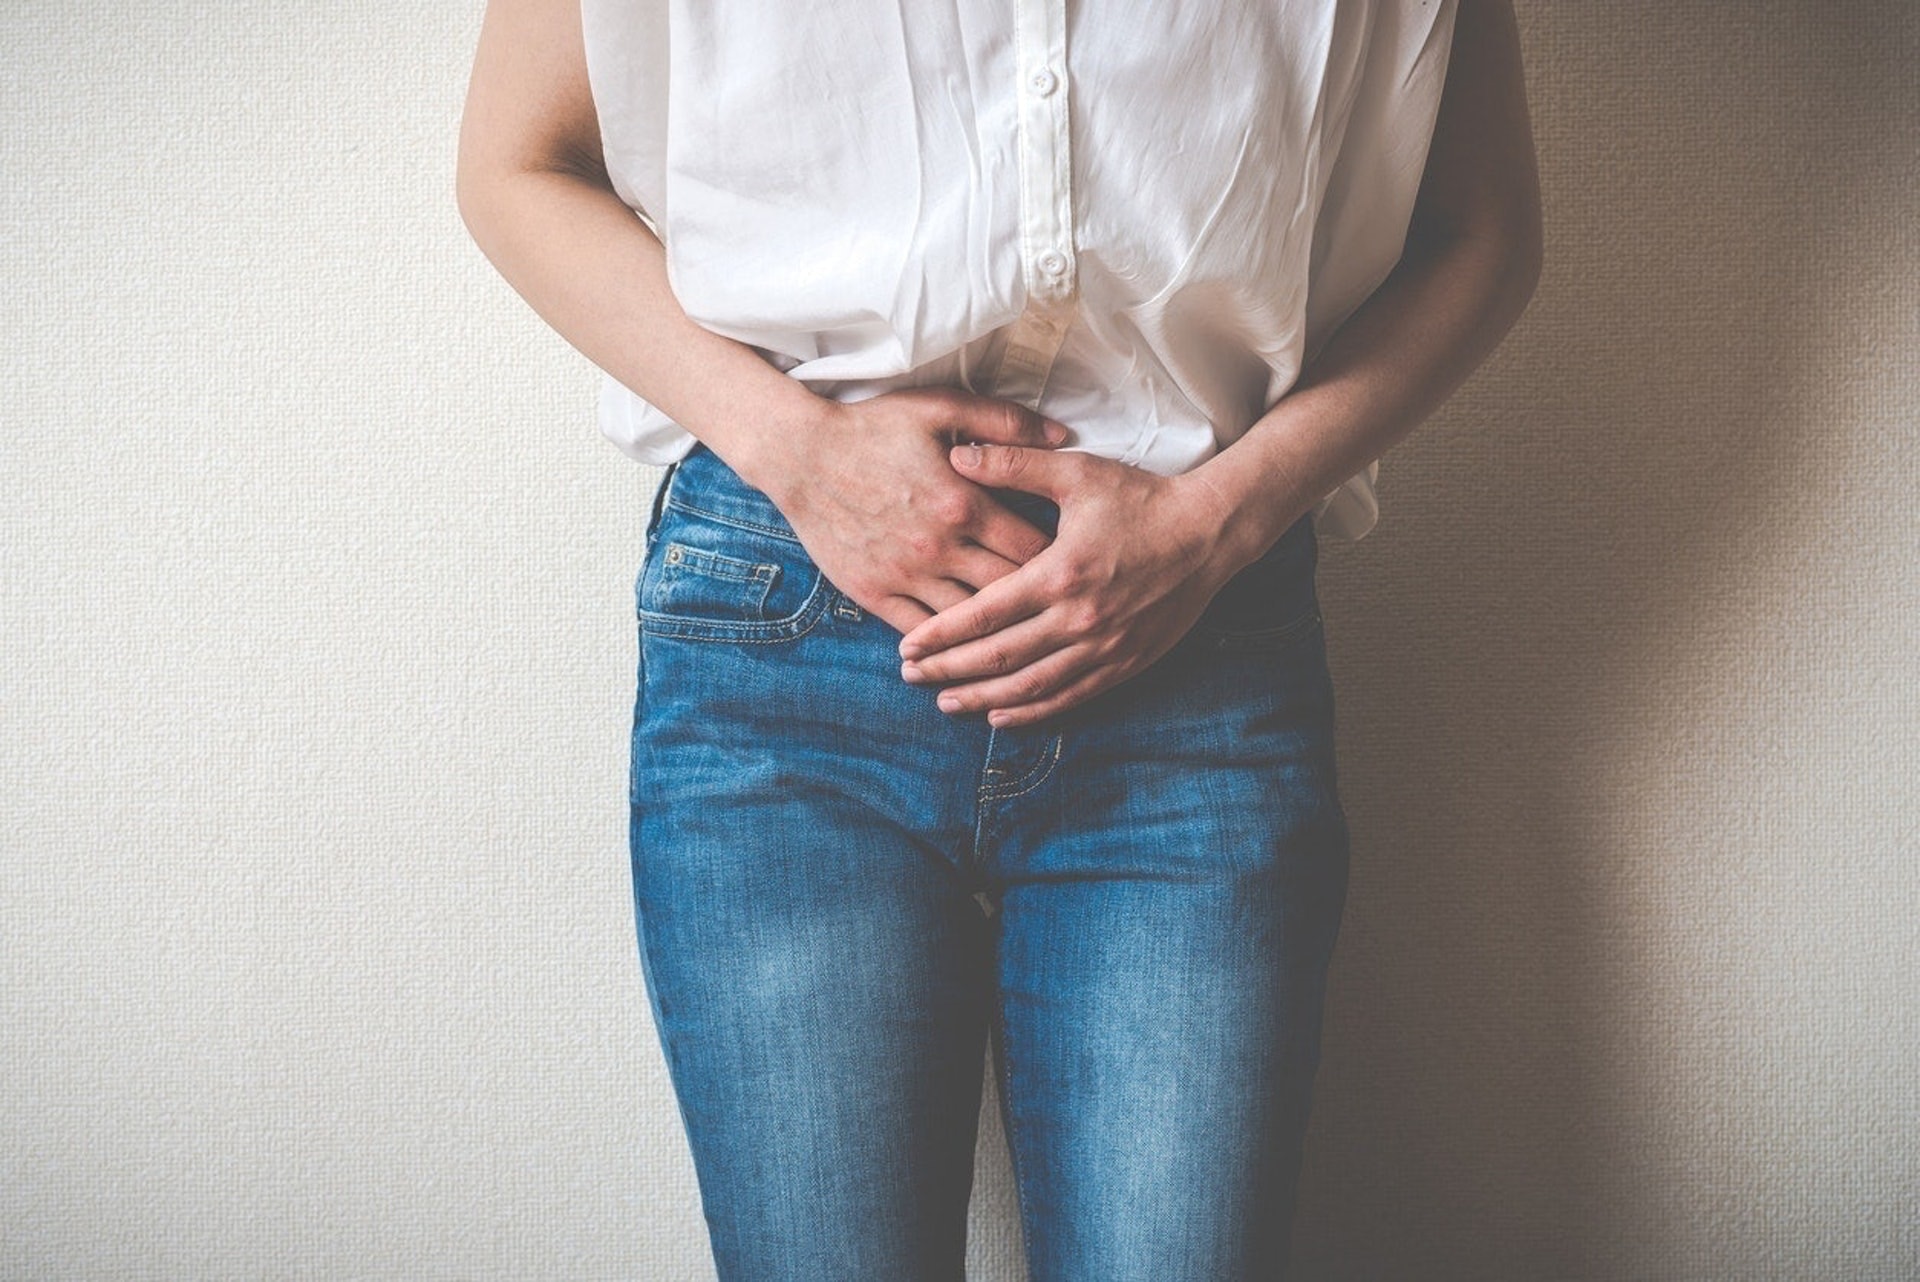 女性如果陰道出現情況異常的分泌物，就需要求醫。（示意圖/Getty Images）